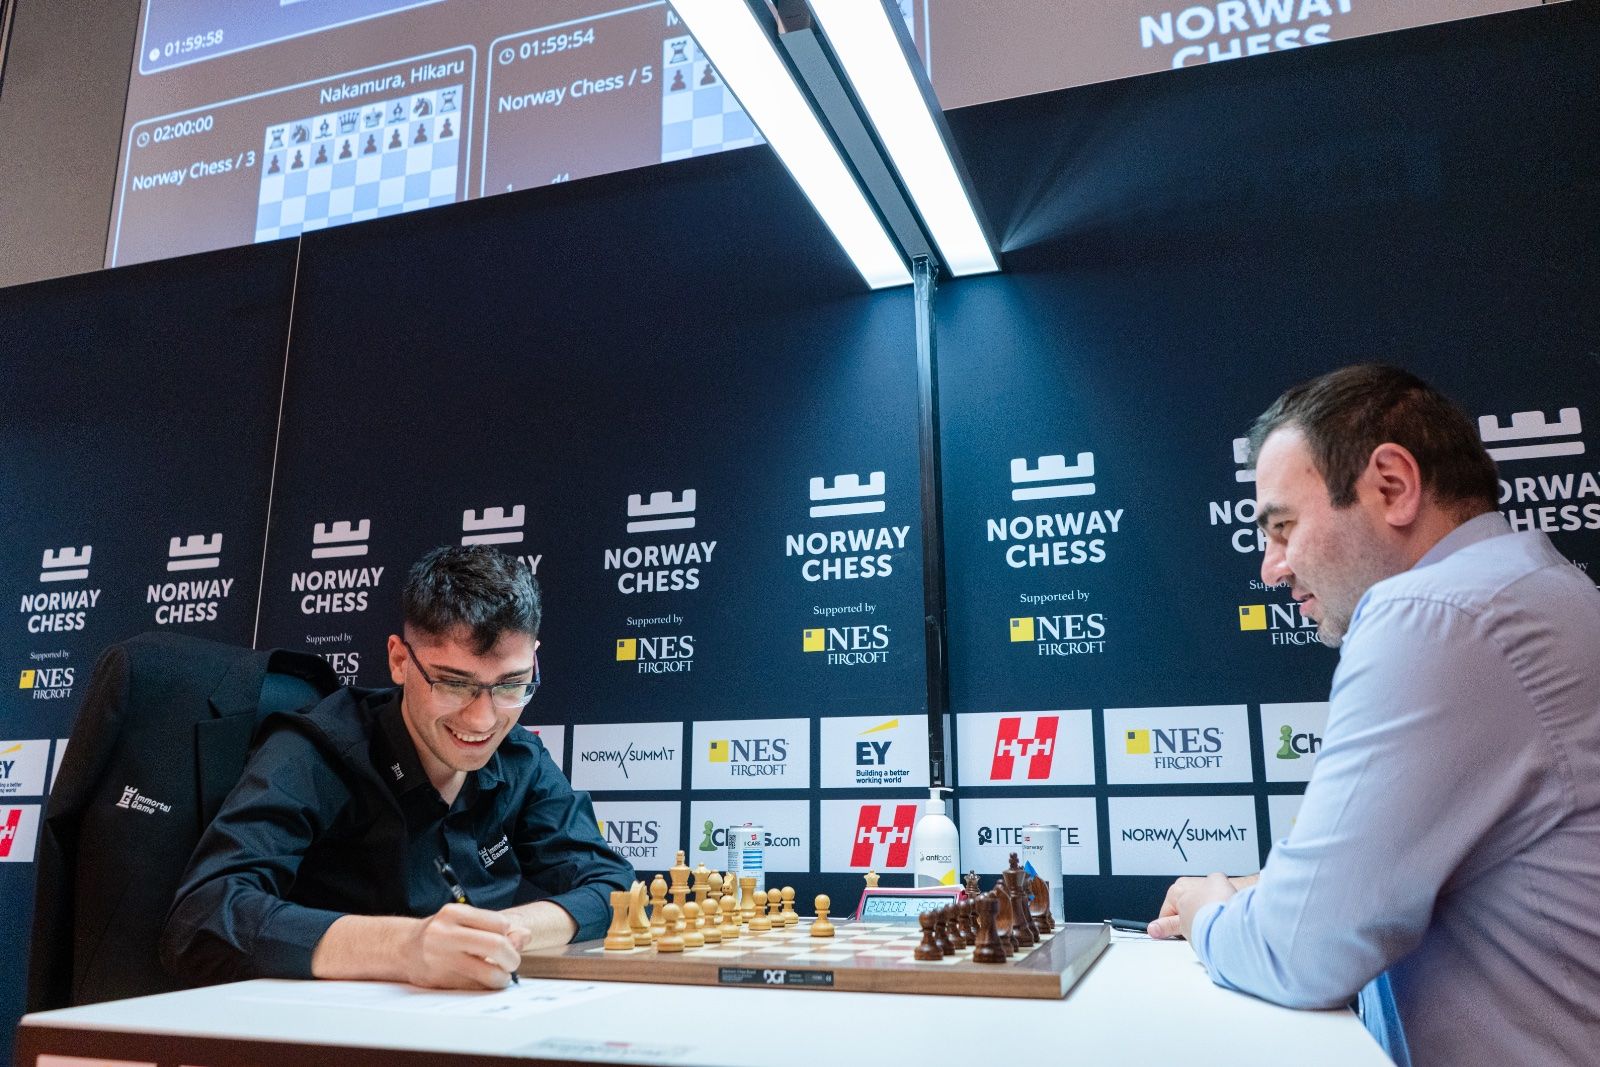 Abdusattorov Extends Lead In Round Of Decisive Games 